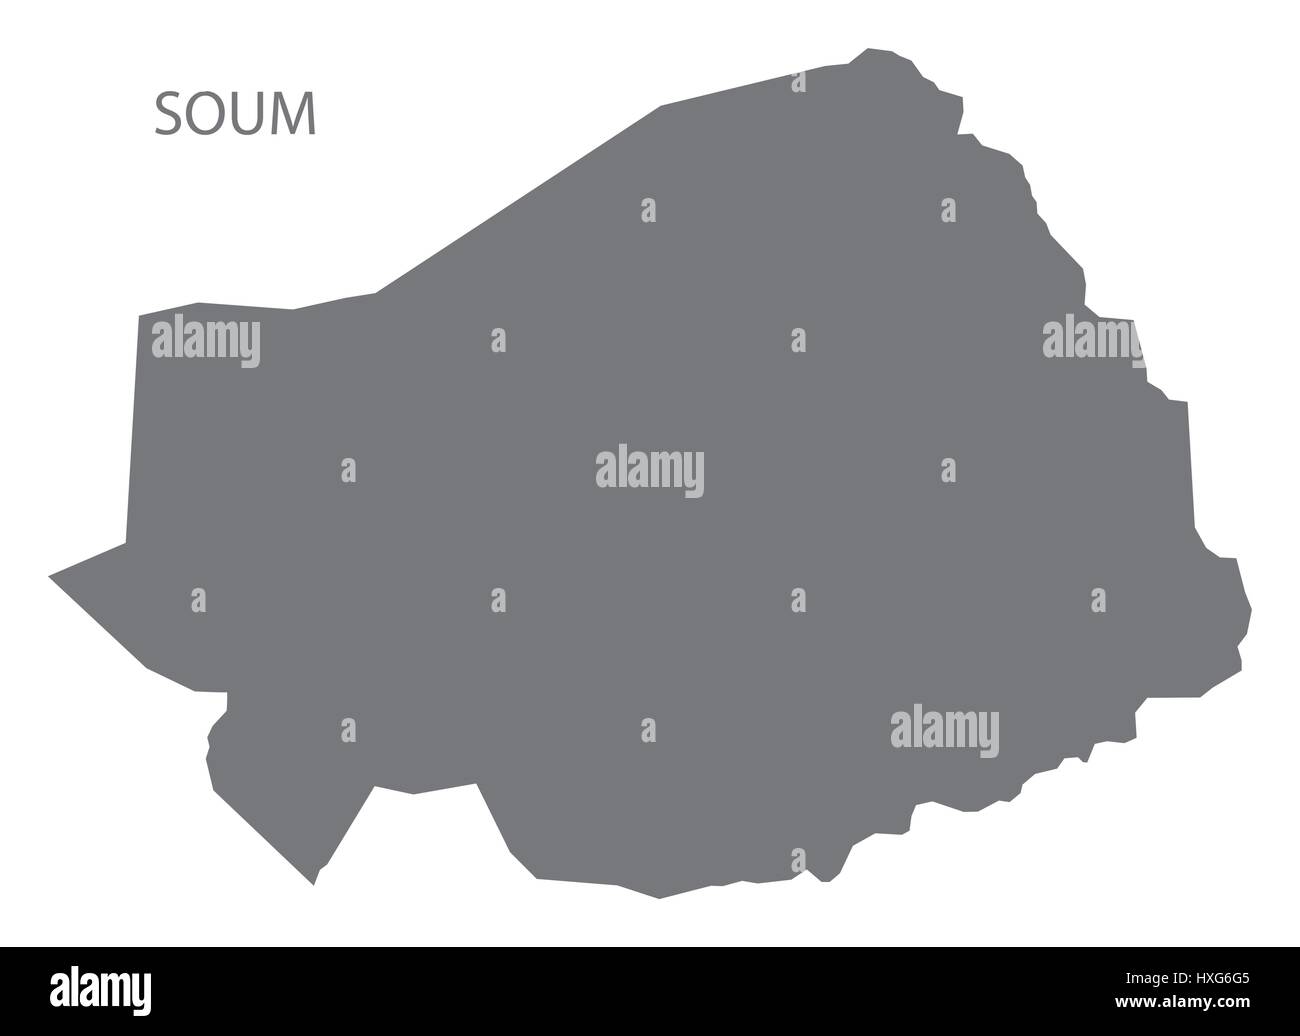 Soum Burkina Faso province map grey illustration silhouette Stock Vector